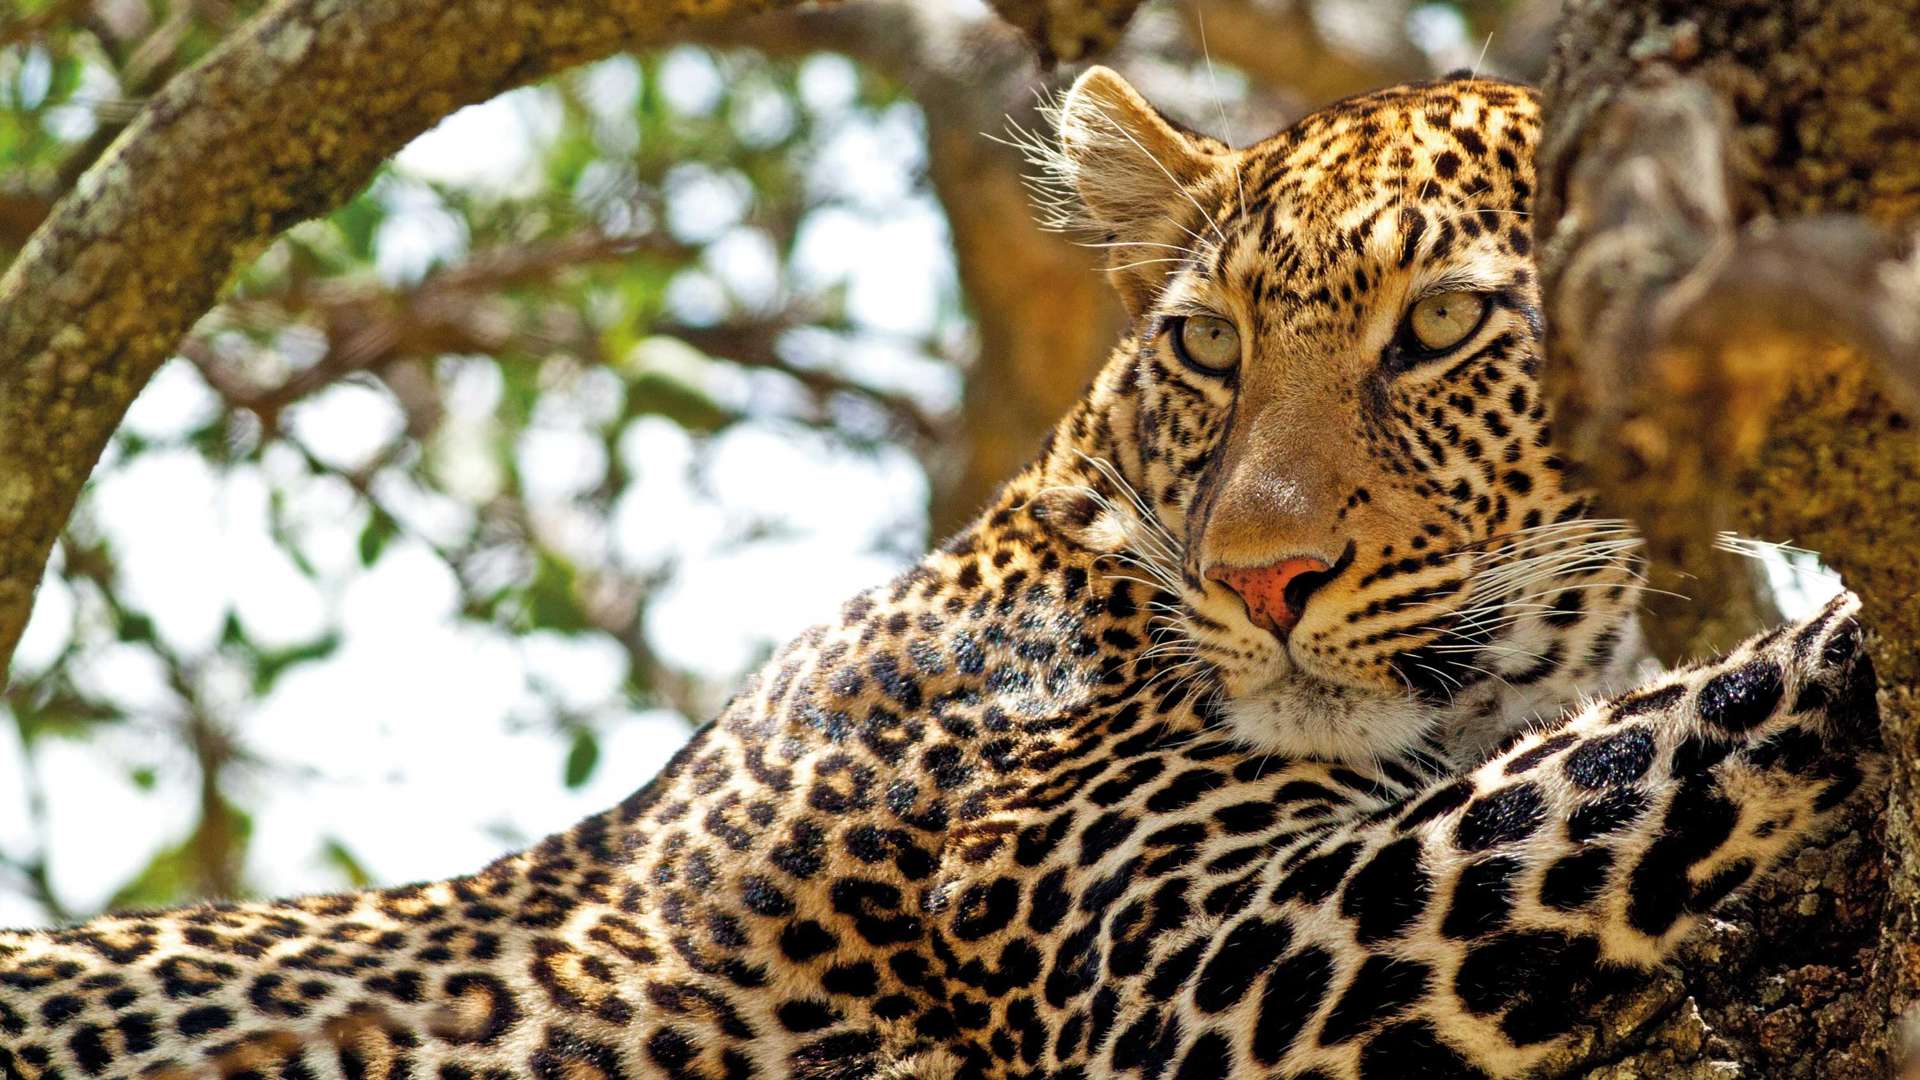 Leopard in tree, Masai Mara, Kenya